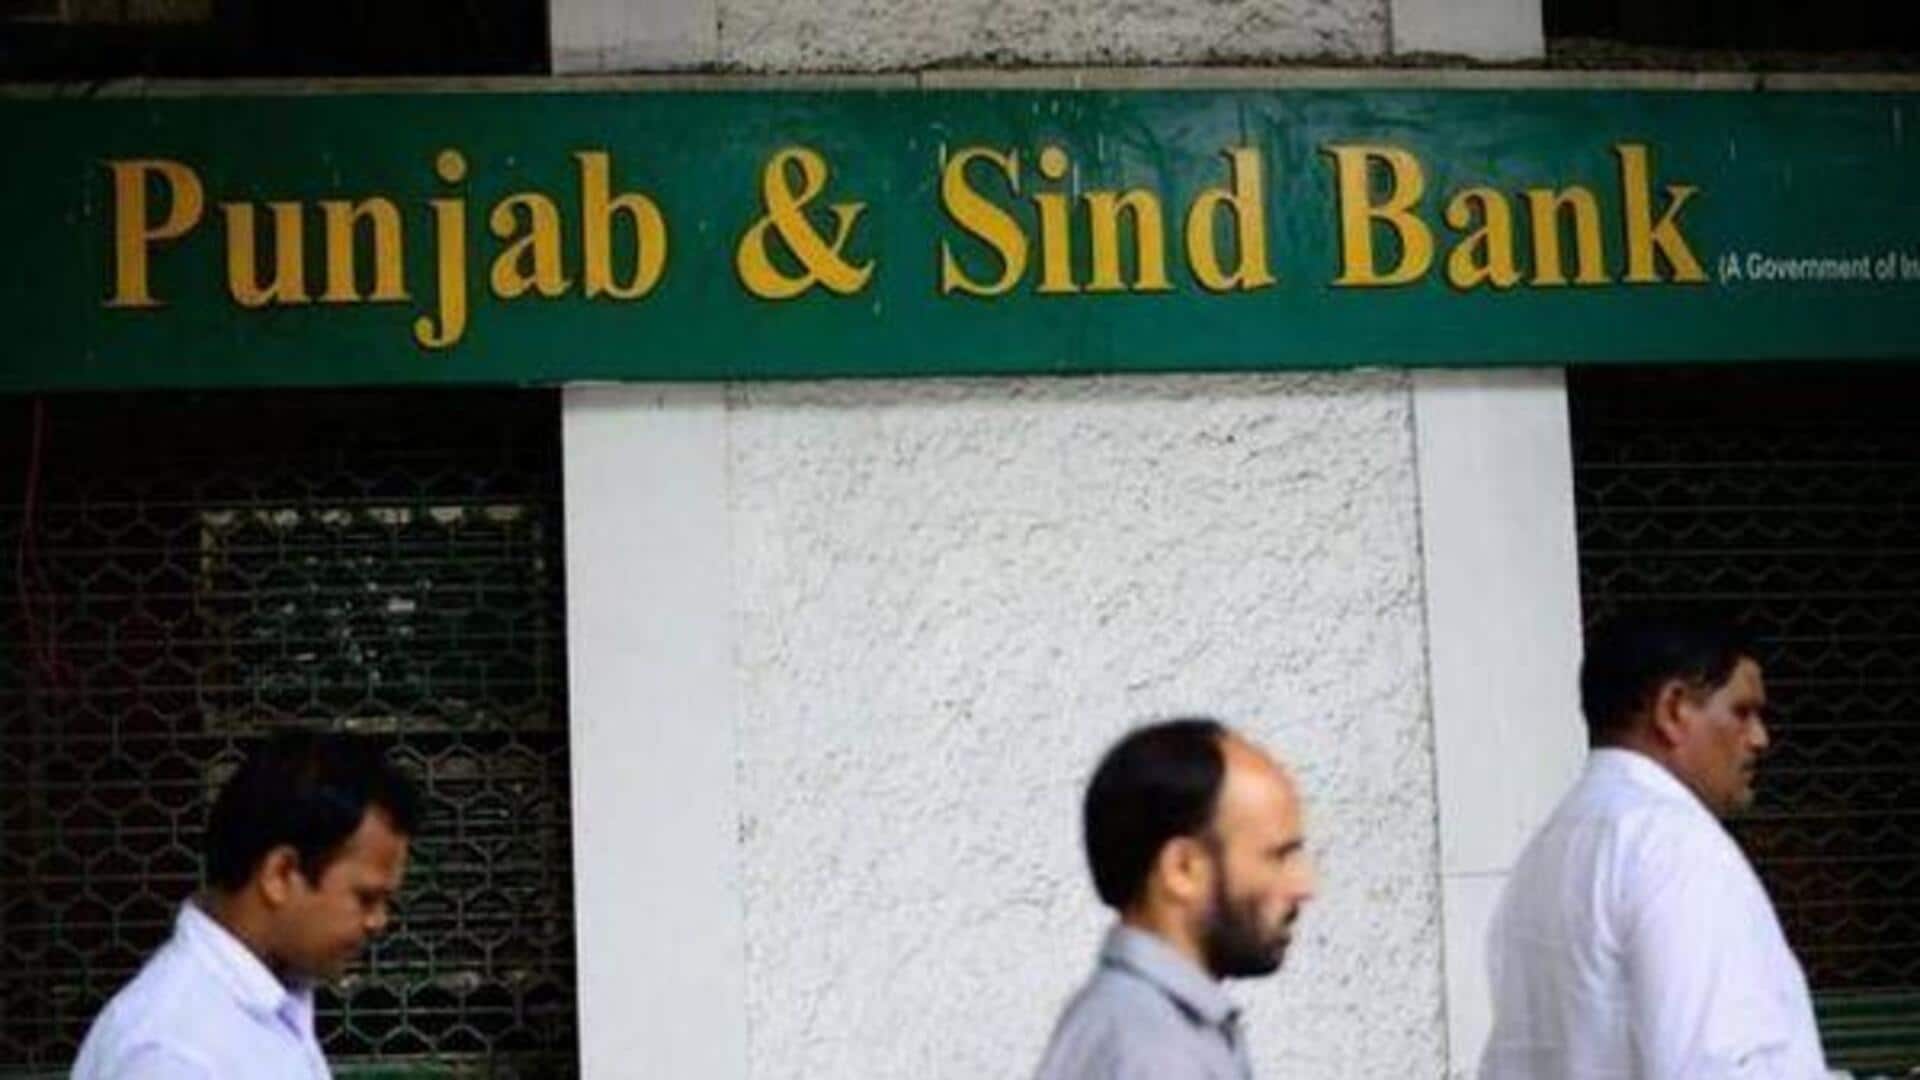 Punjab & Sind Bank announces ₹2,000 crore fundraising plan